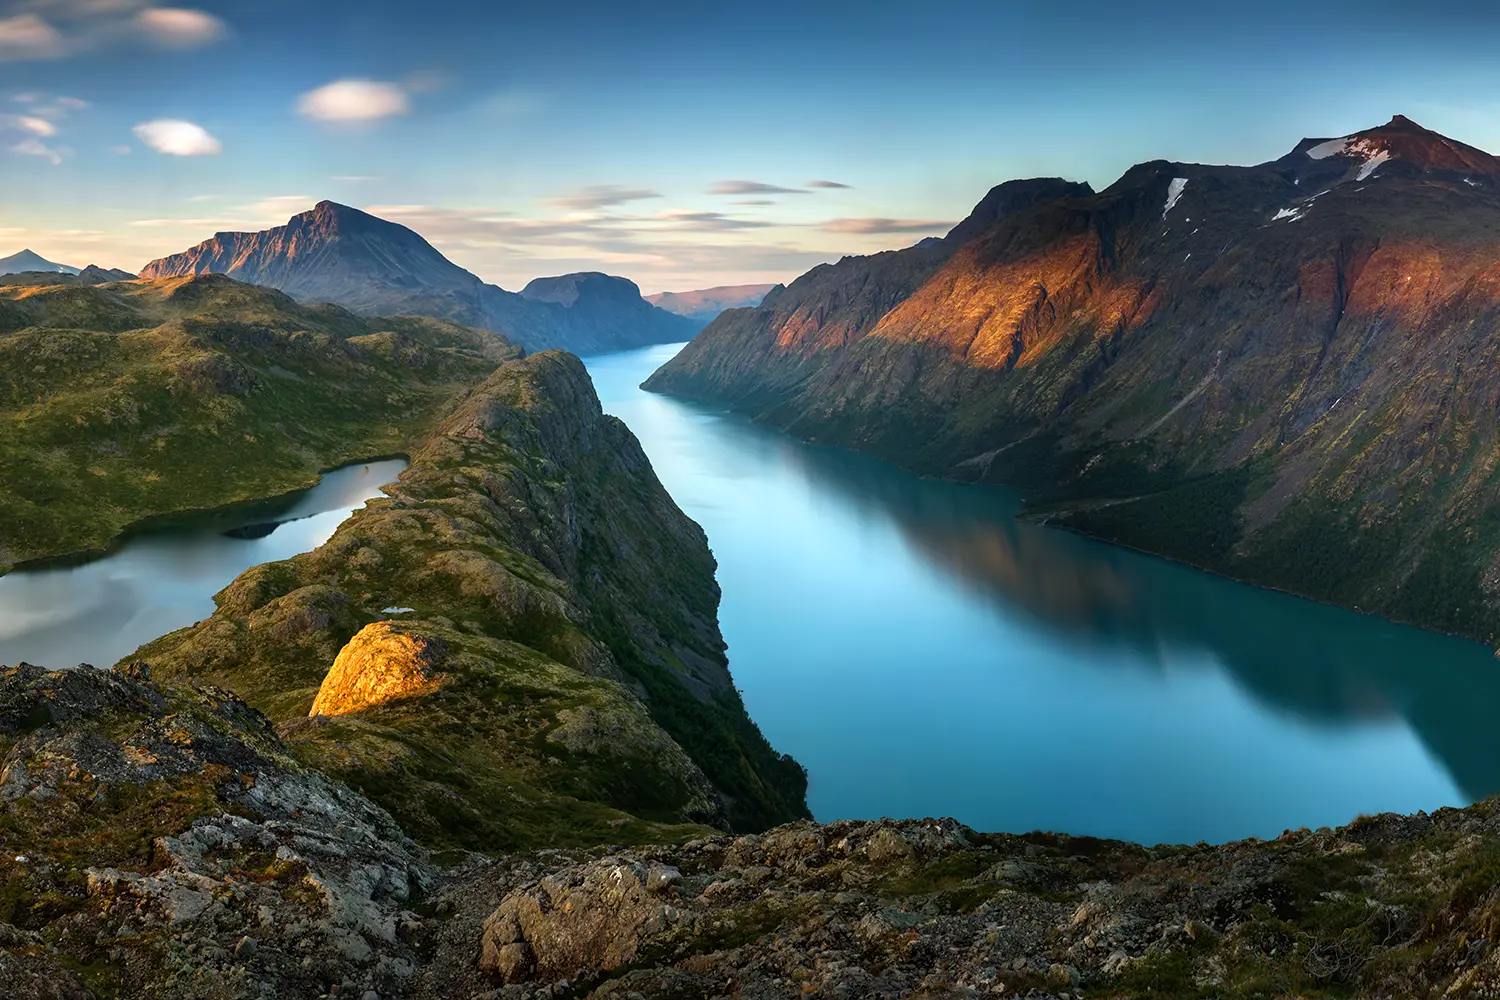 Panorama of Gjende Lake in Jotunheimen mountains, Norway